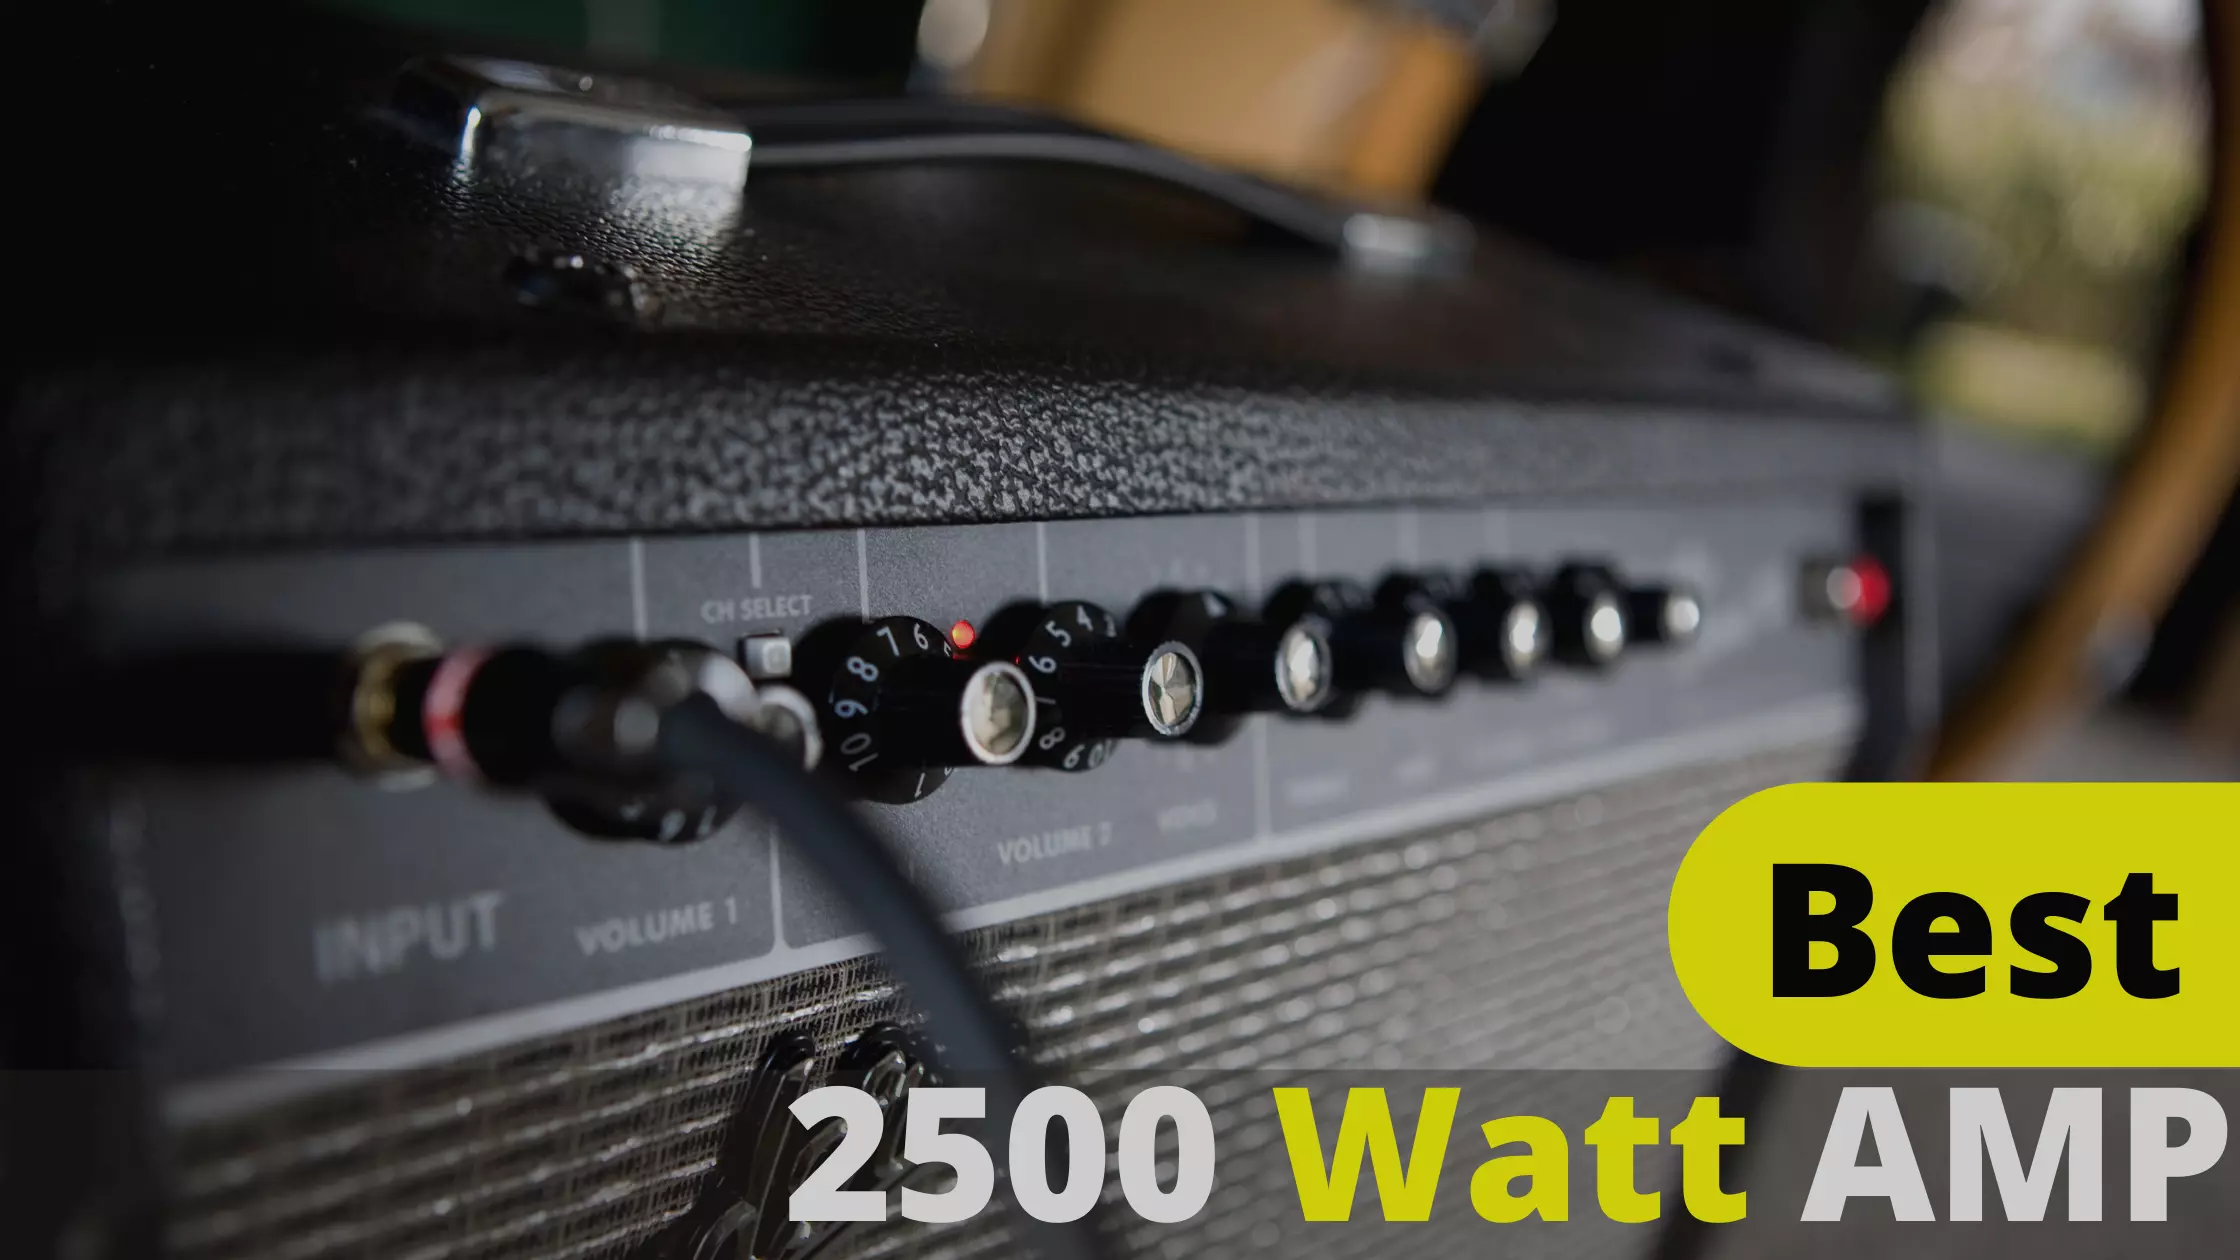 Best 2500 Watt Amp With Shopping Tips Details